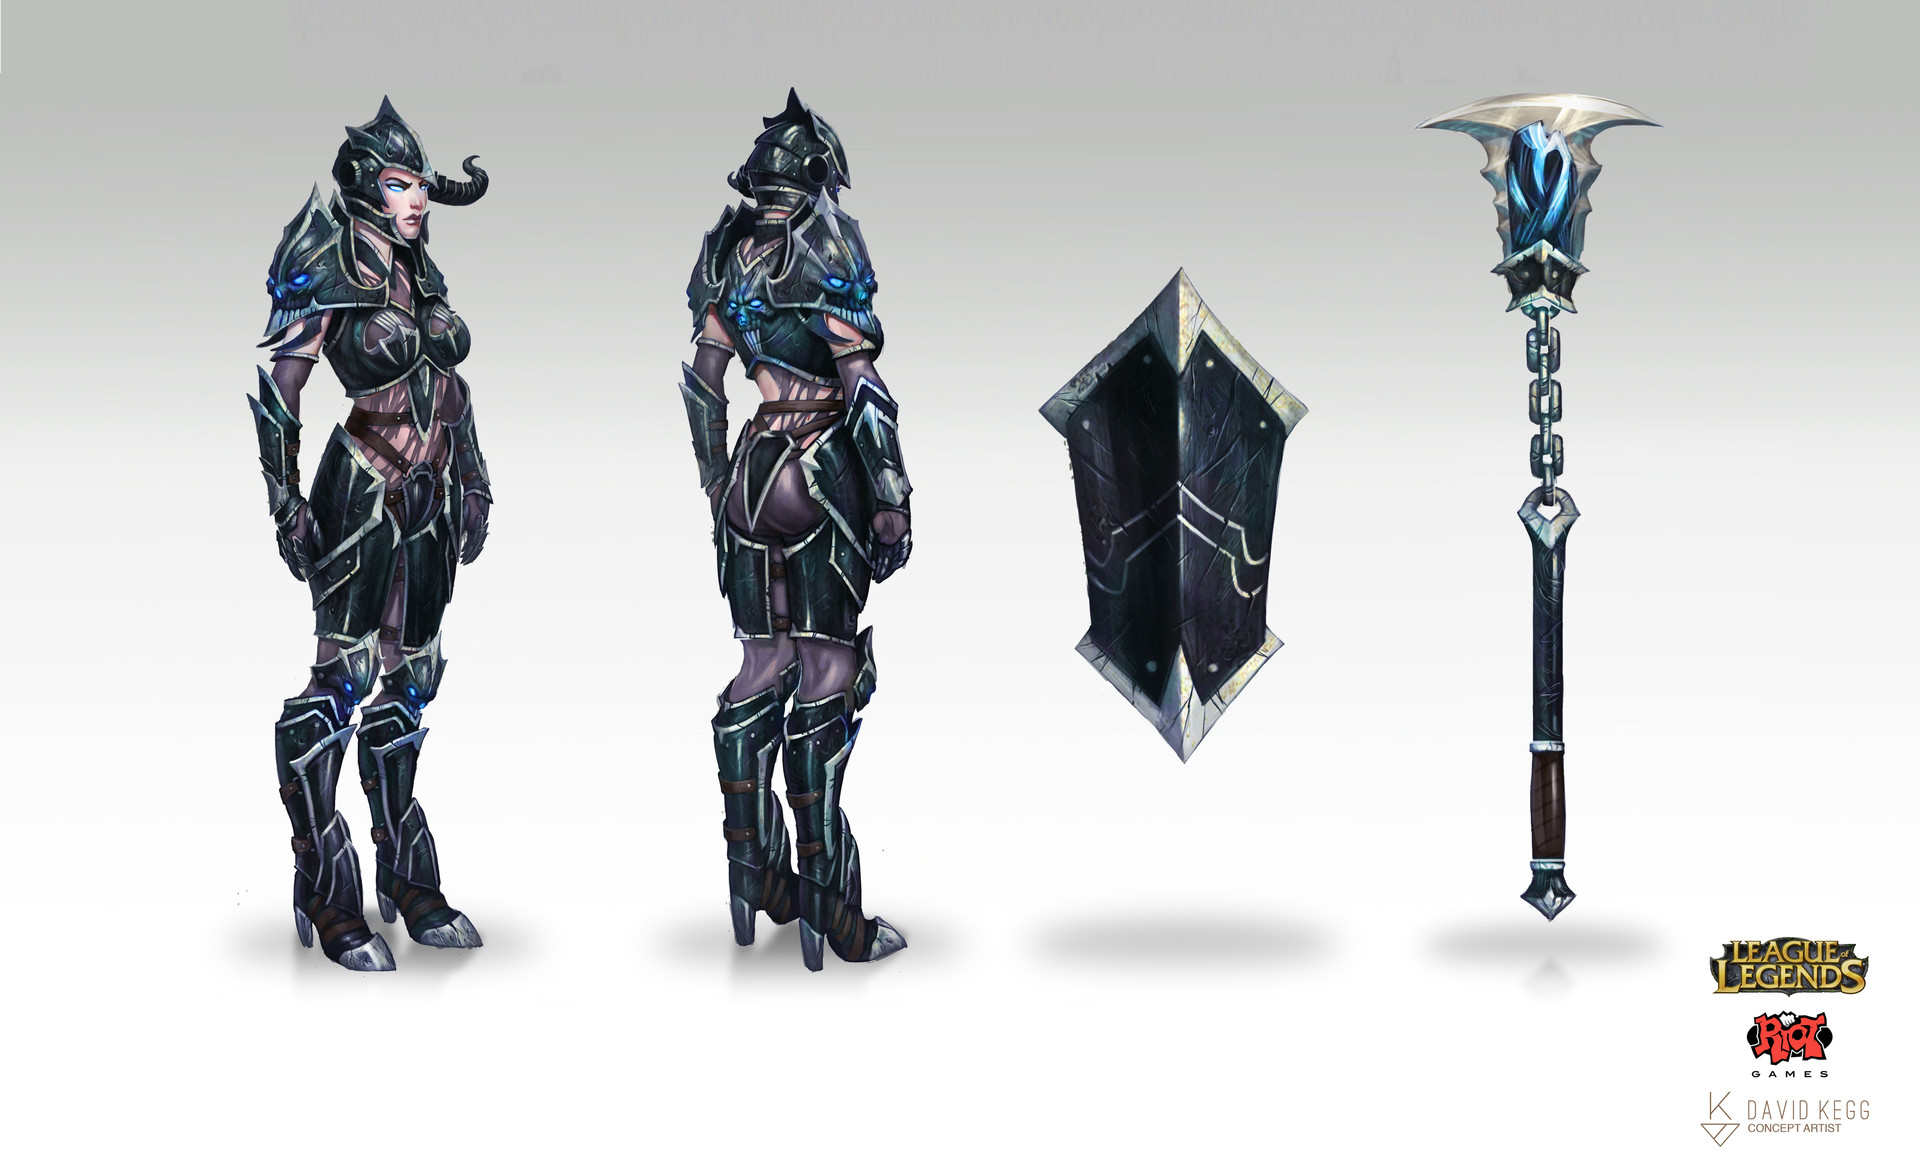 David Kegg - Concept Artist and Illustrator - League of Legends: Darkrider Sejuani...